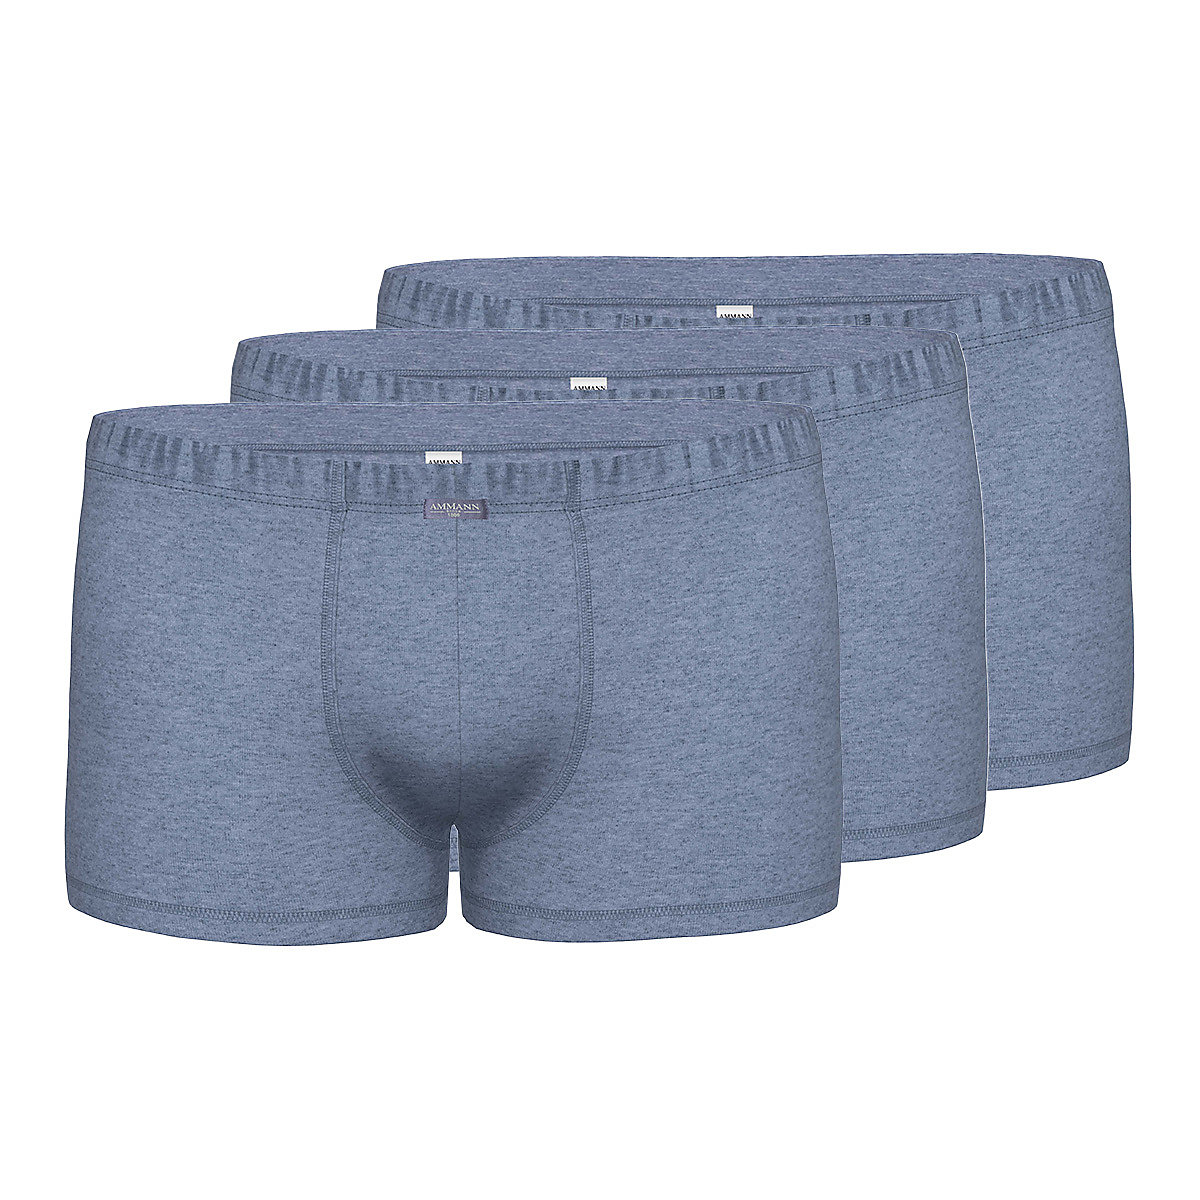 AMMANN Retro-Short / Pant 3er Pack Denim Panties blau